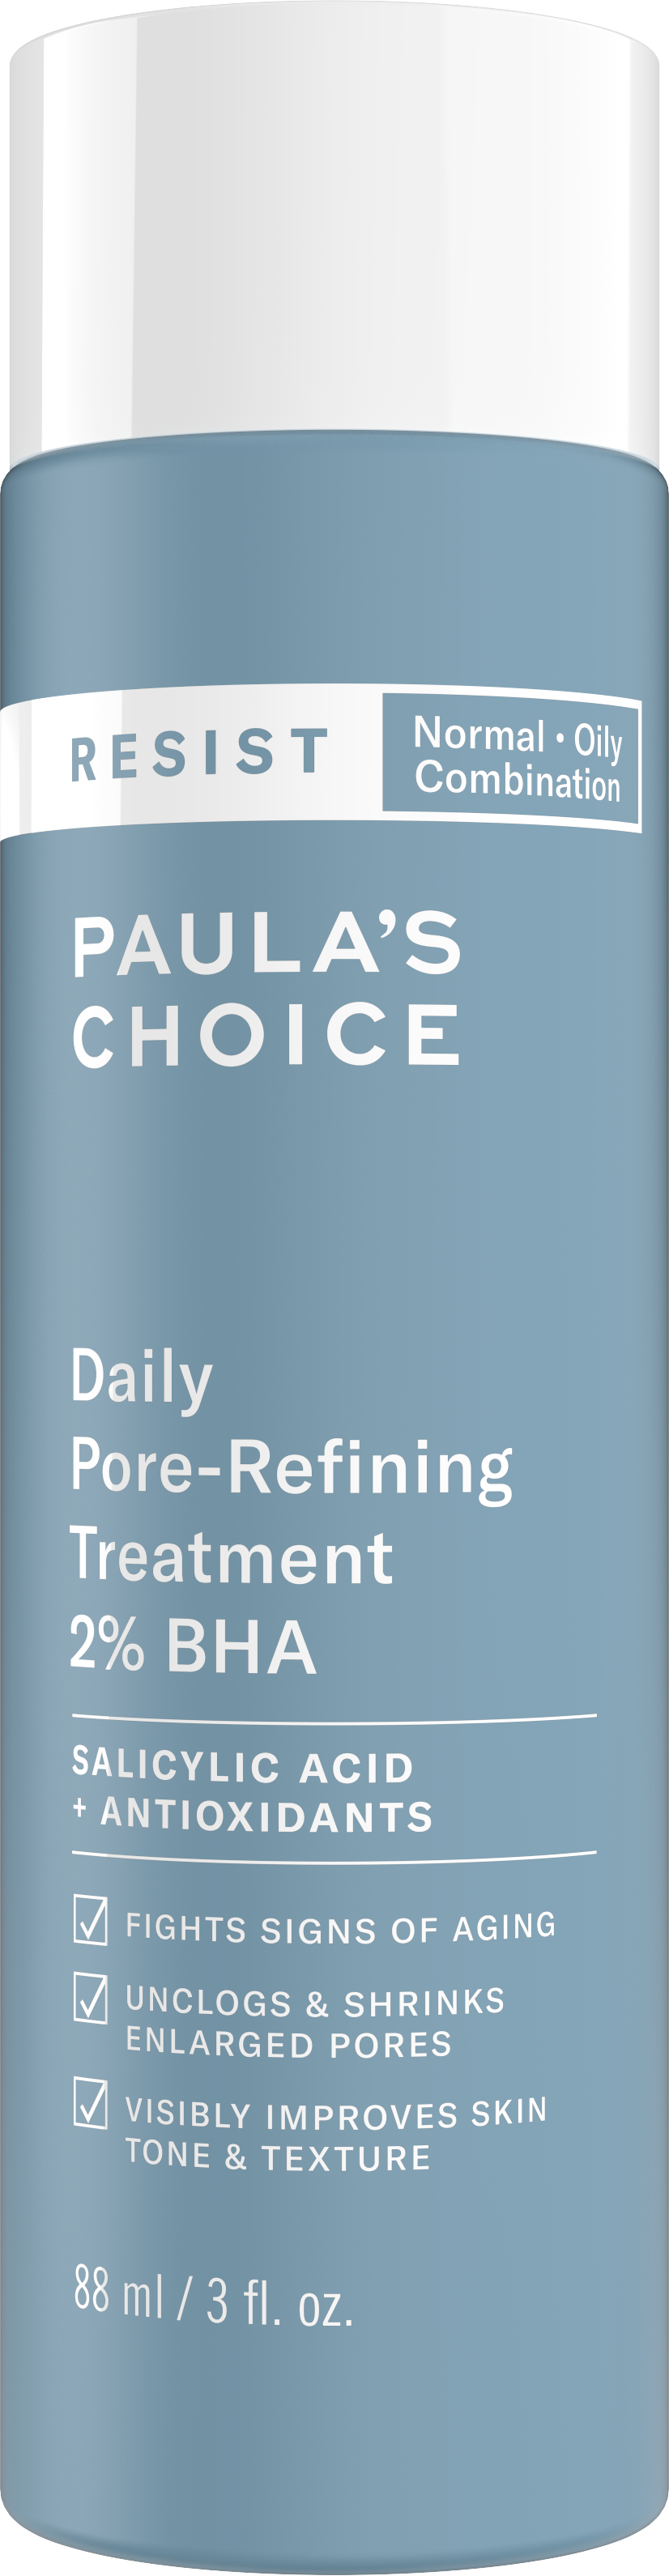 Paula's Choice RESIST Daily Pore-Refining Treatment 2% BHA Paula's Choice RESIST Daily Pore-Refining Treatment 2% BHA 1